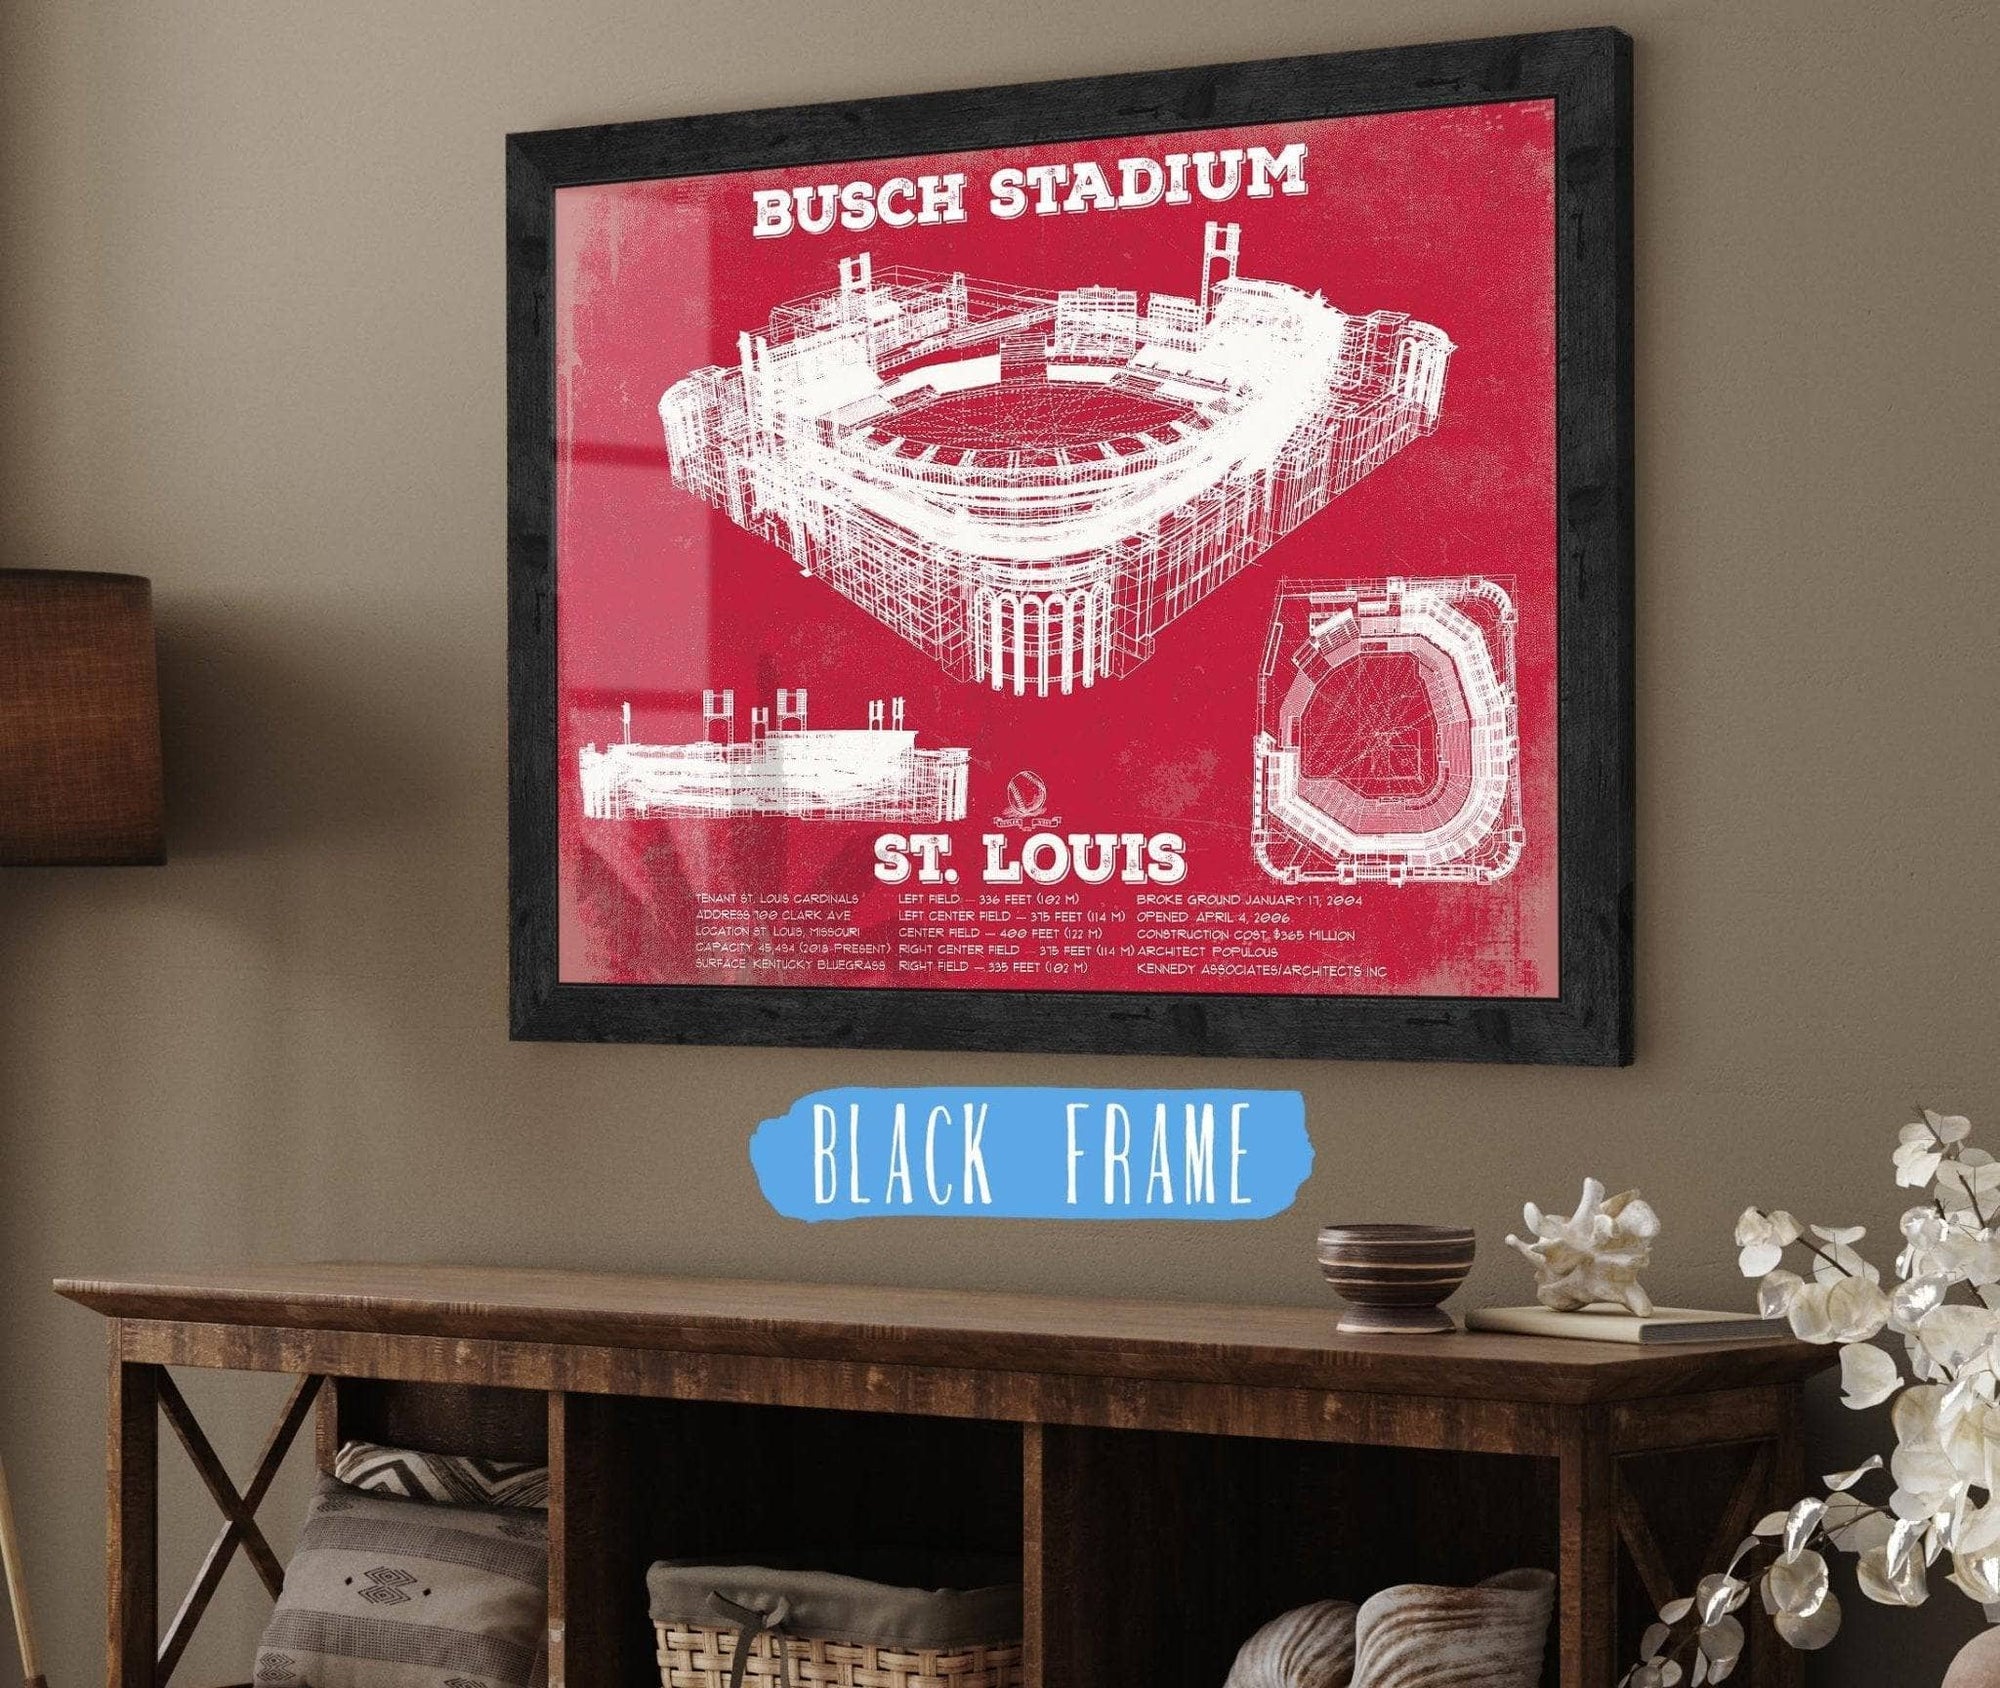 St. Louis Cardinals at Busch Stadium Print - the Stadium Shoppe